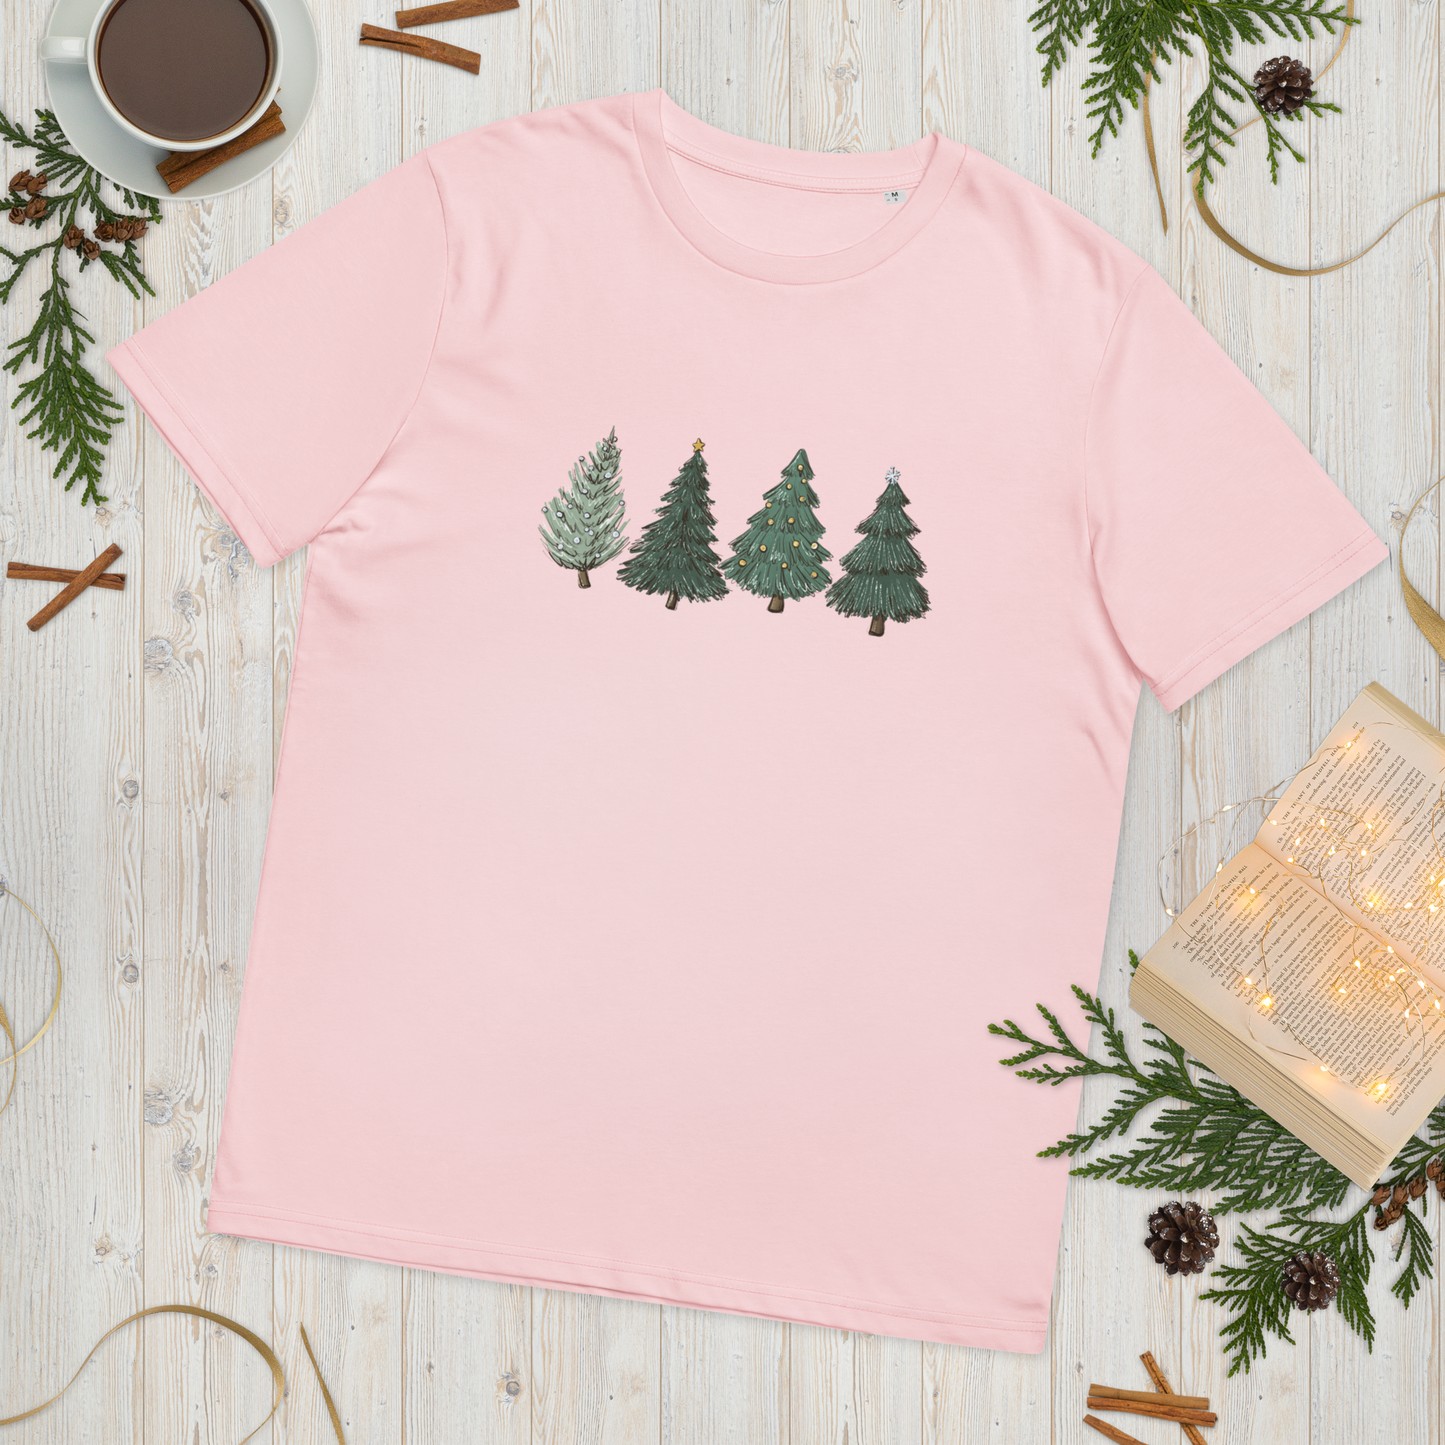 Organic cotton unisex t-shirt: Four green Christmas trees